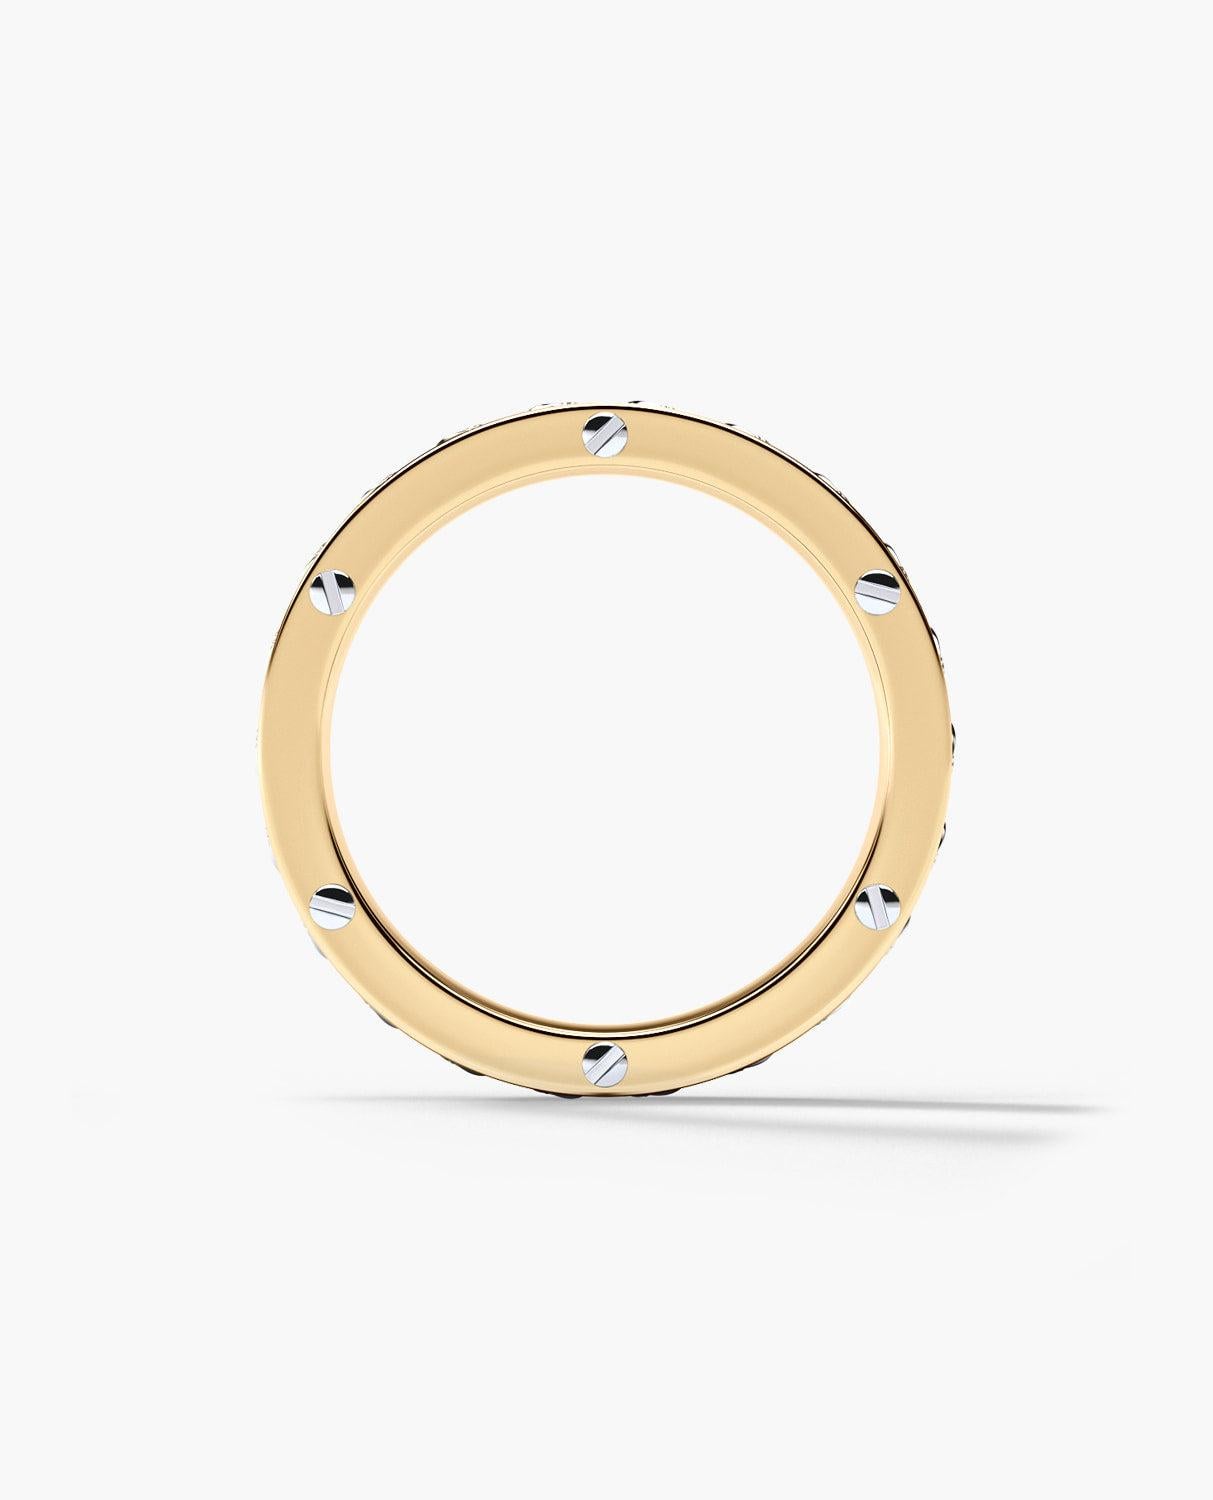 Round Cut KENSINGTON Two-Tone 14k Yellow & White Gold Ring with 0.65ct Diamonds